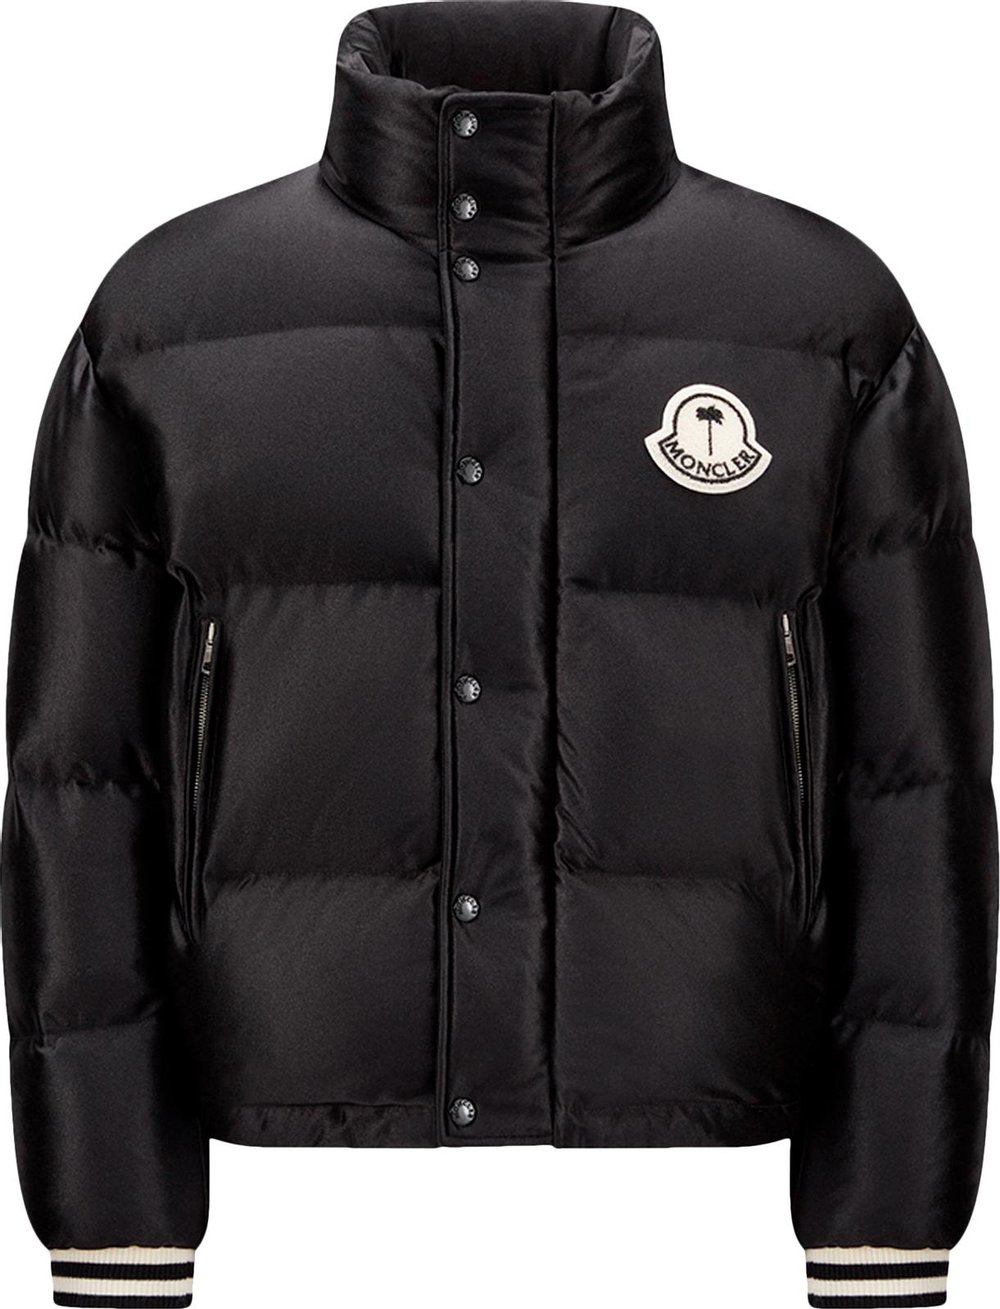 Buy Moncler Genius Wharram Jacket 'Black' - 1A00017 M2579 999 | GOAT